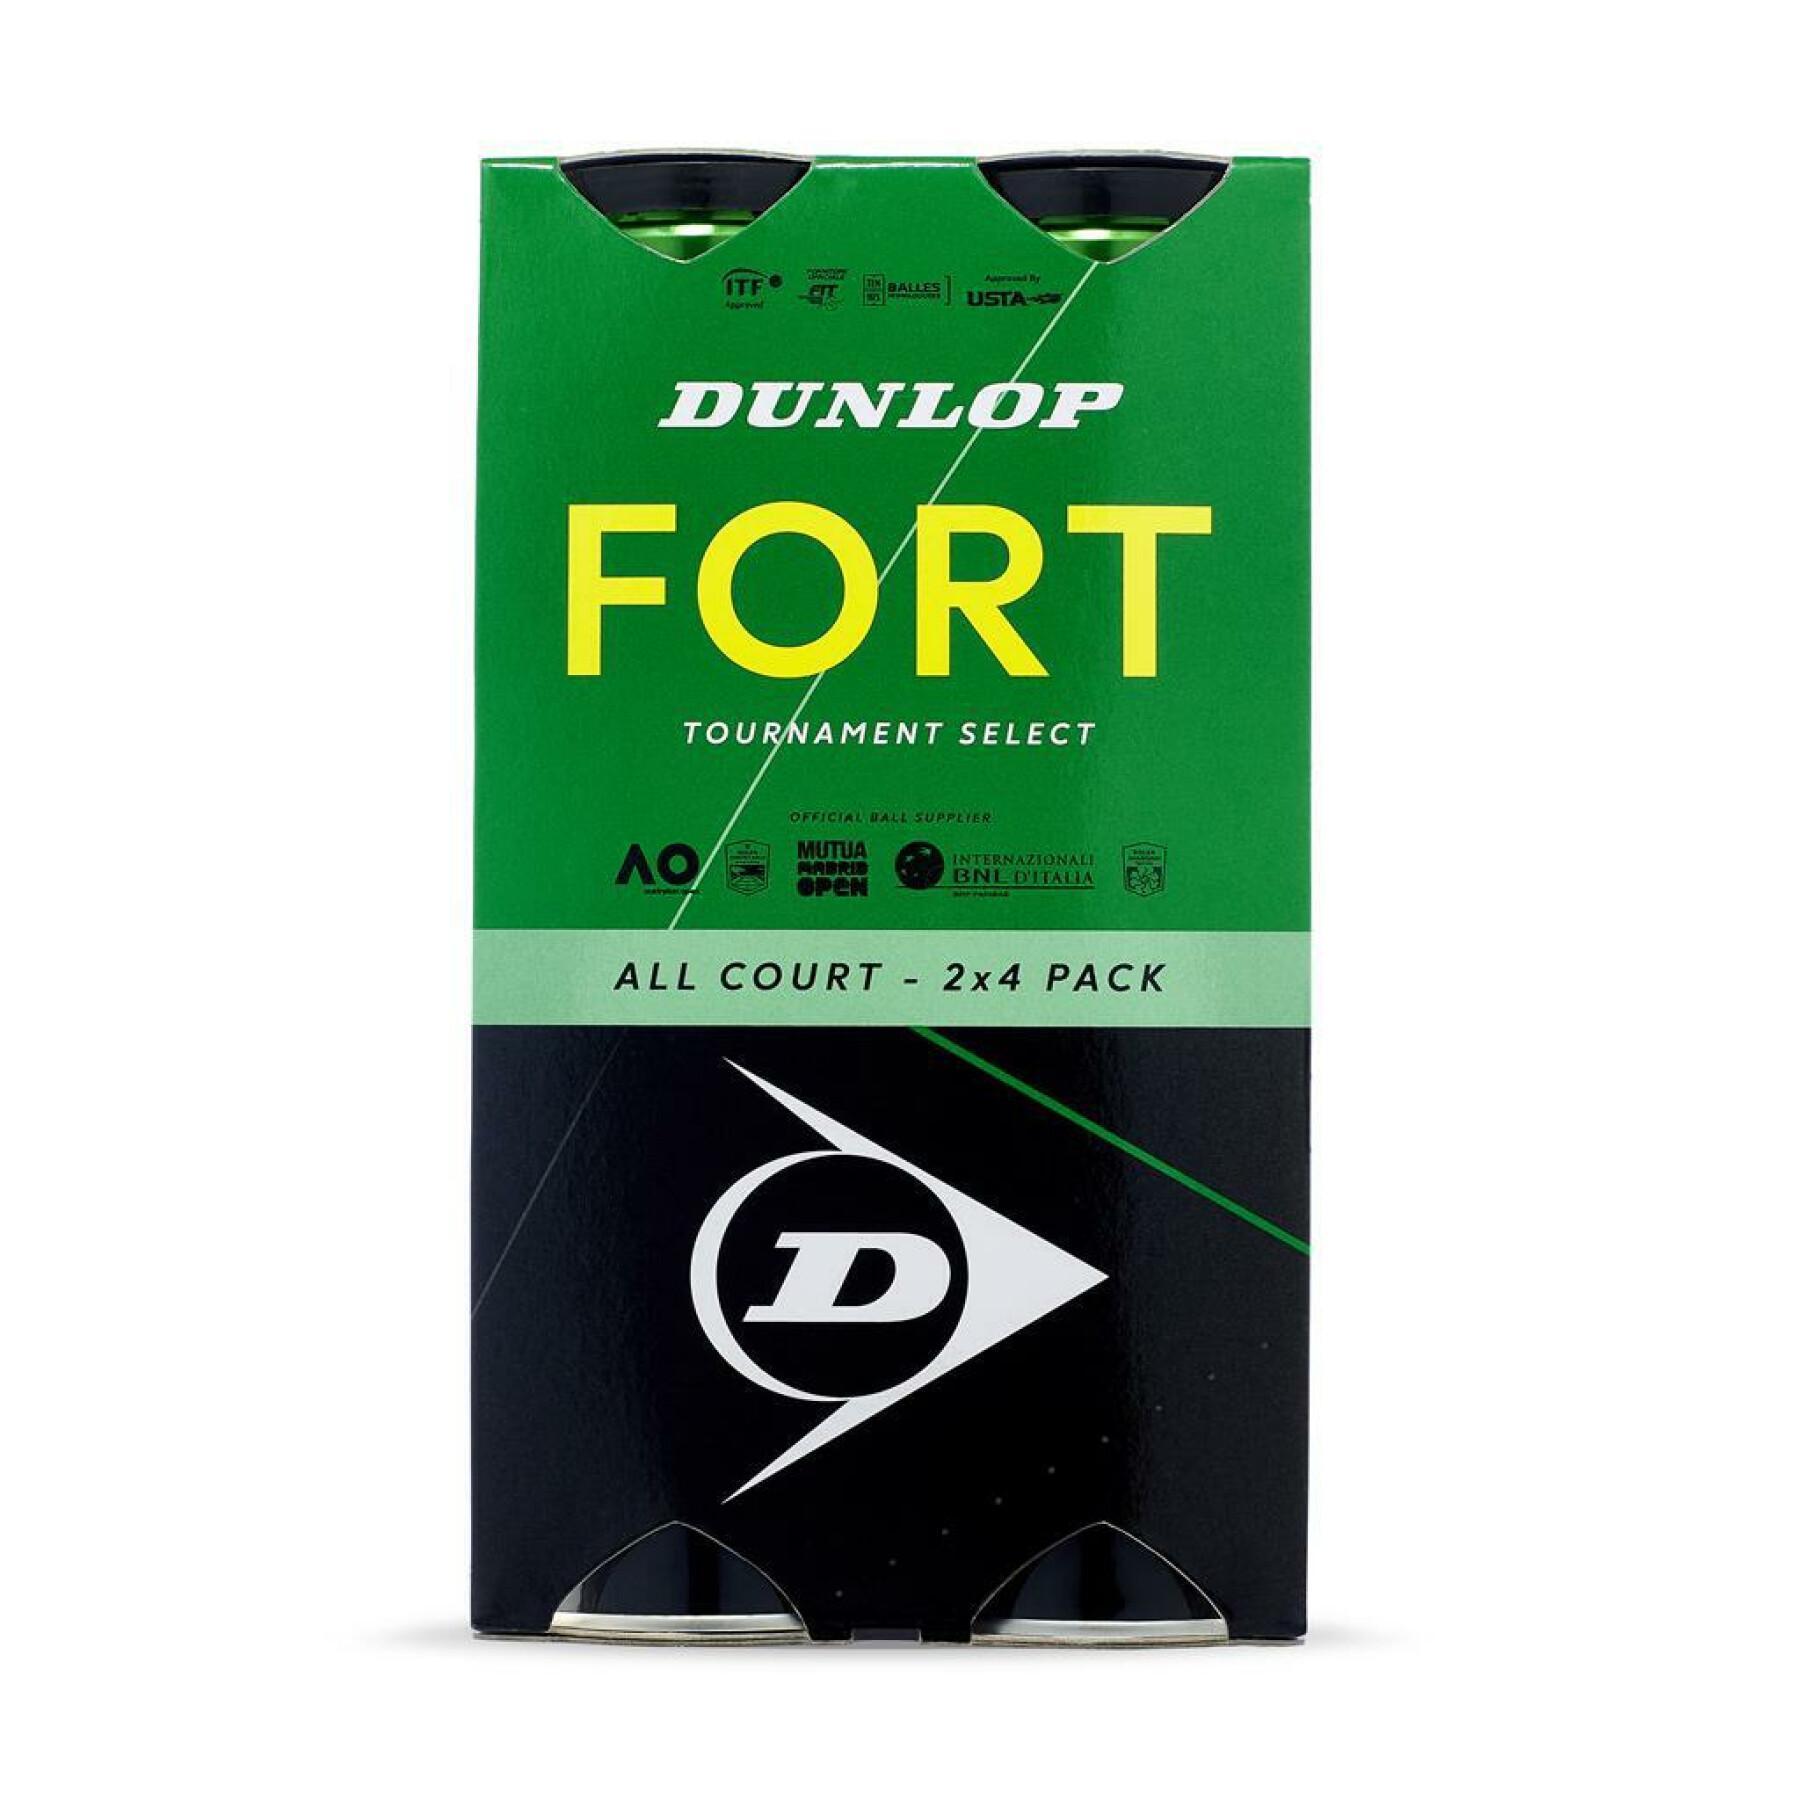 Set of 2 tubes of 4 tennis balls Dunlop fort all court